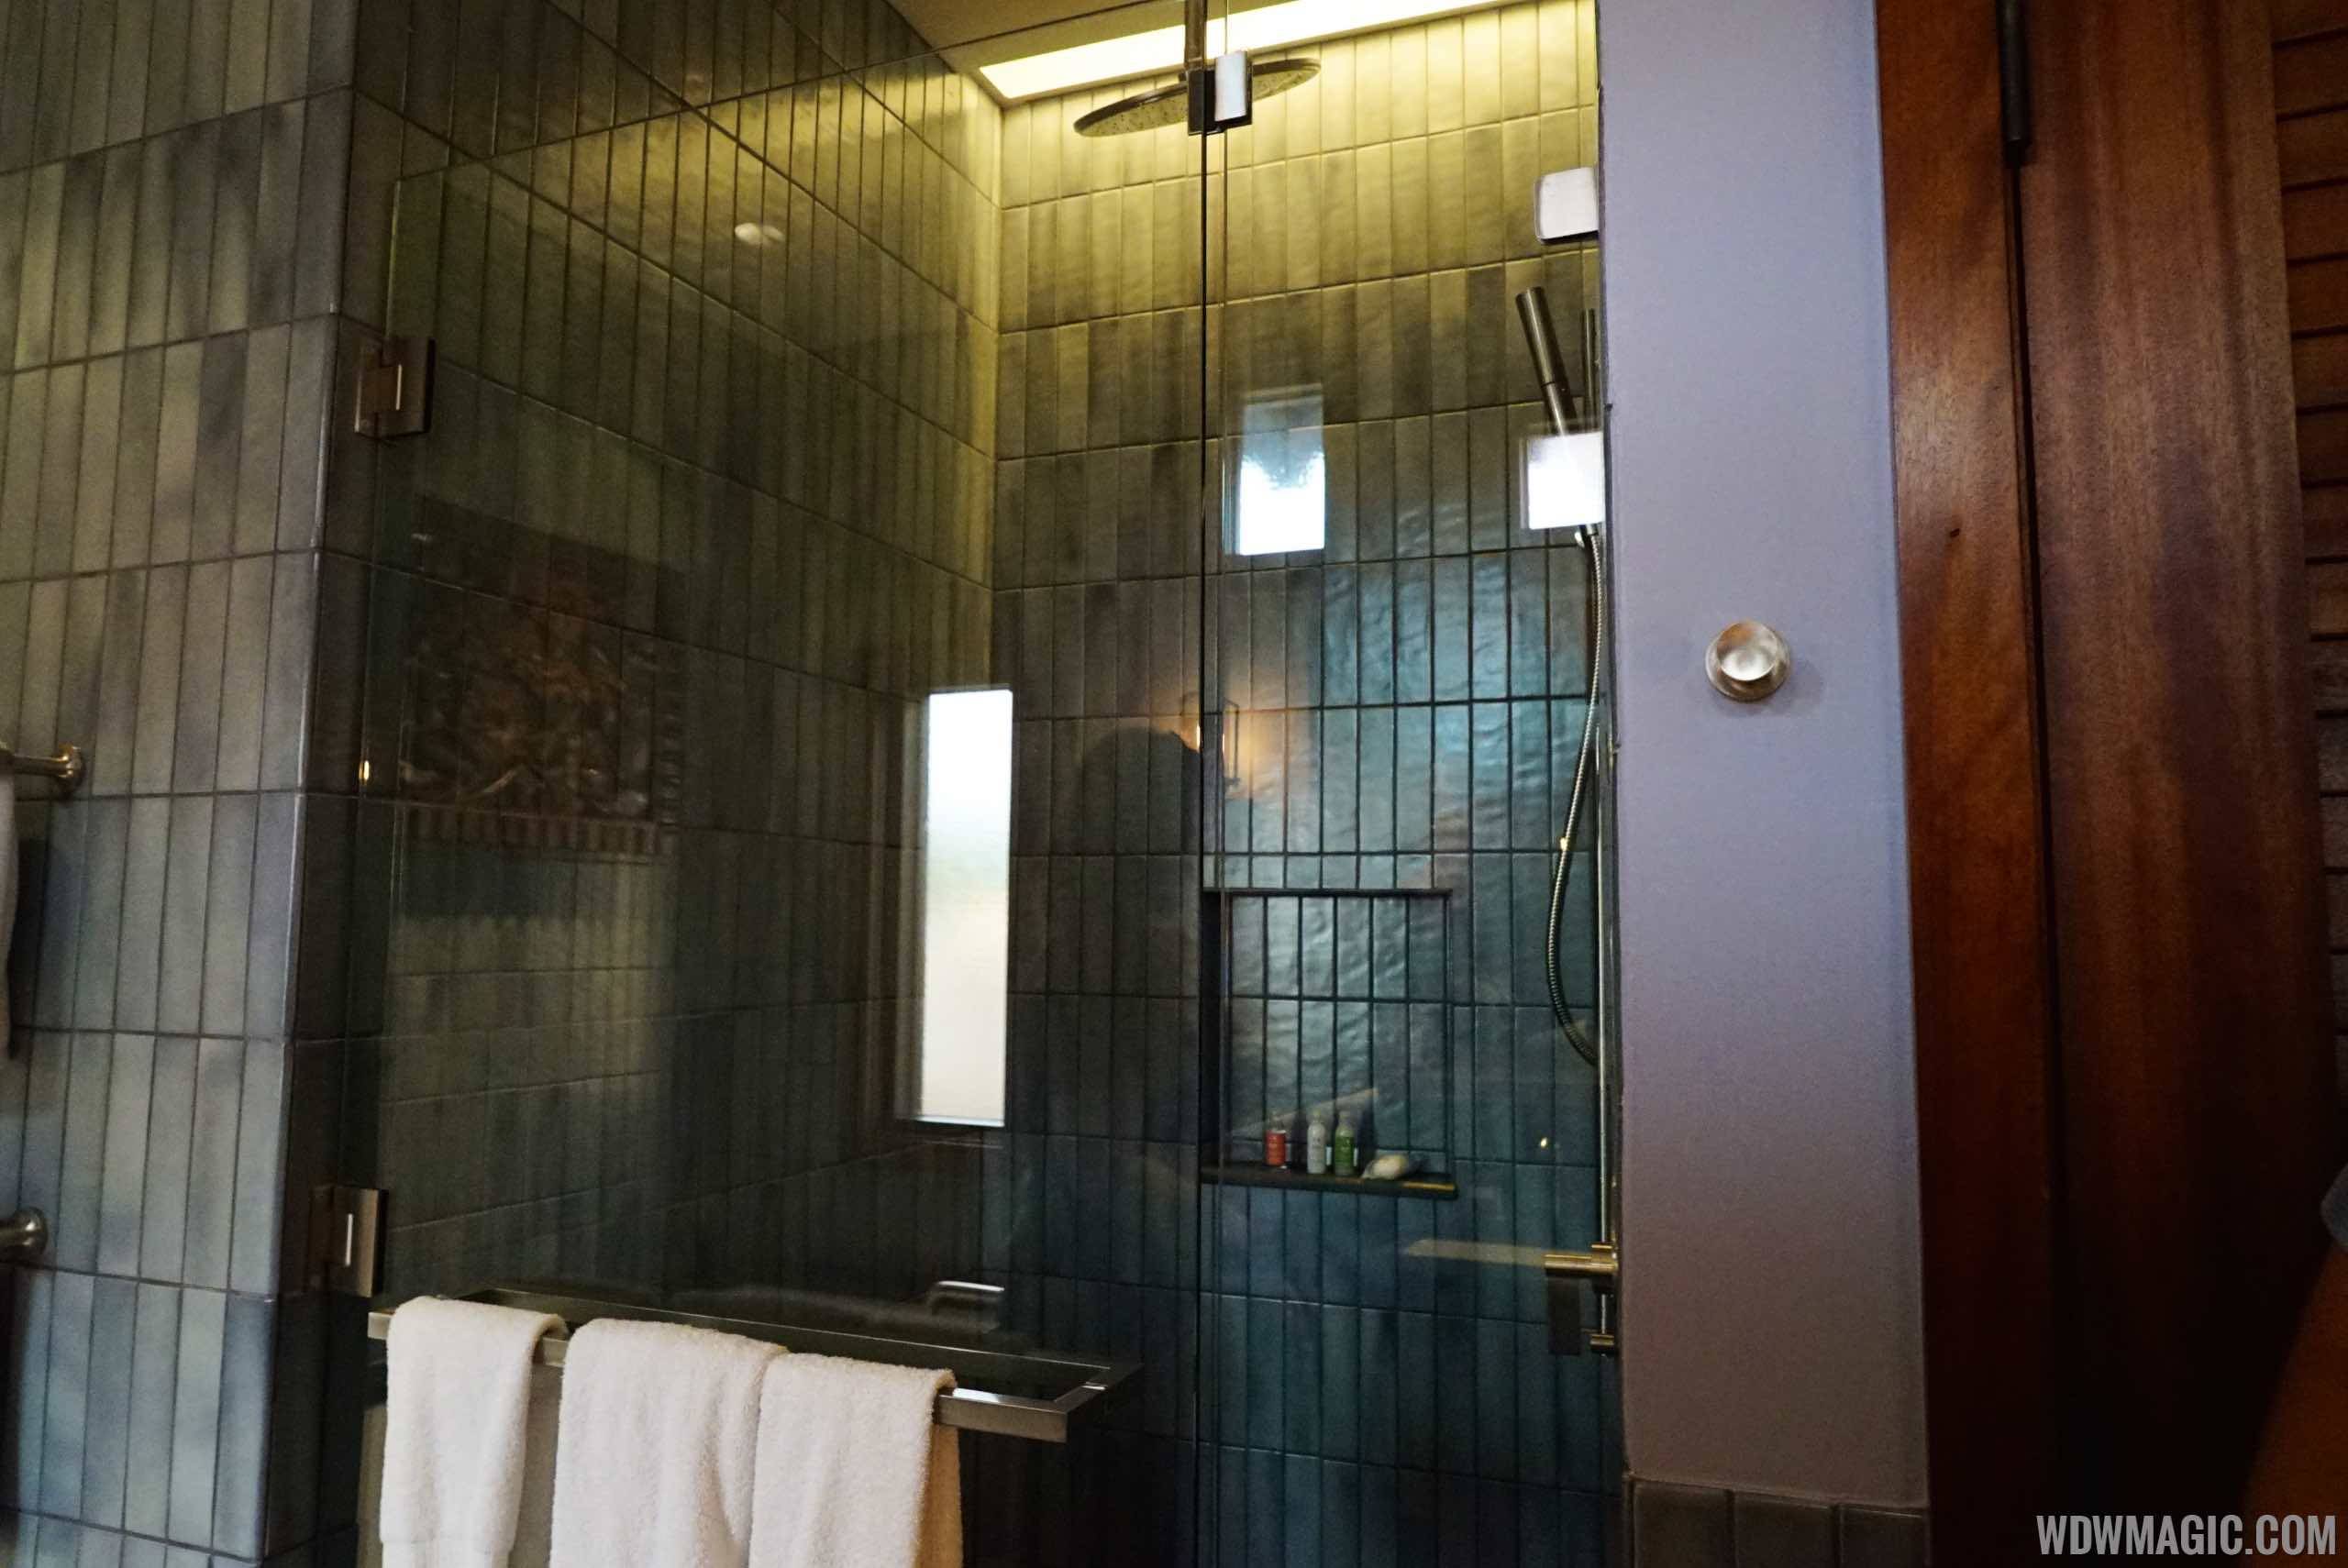 Disney's Polynesian Village Resort Bora Bora Bungalow - Walk in shower in master bath